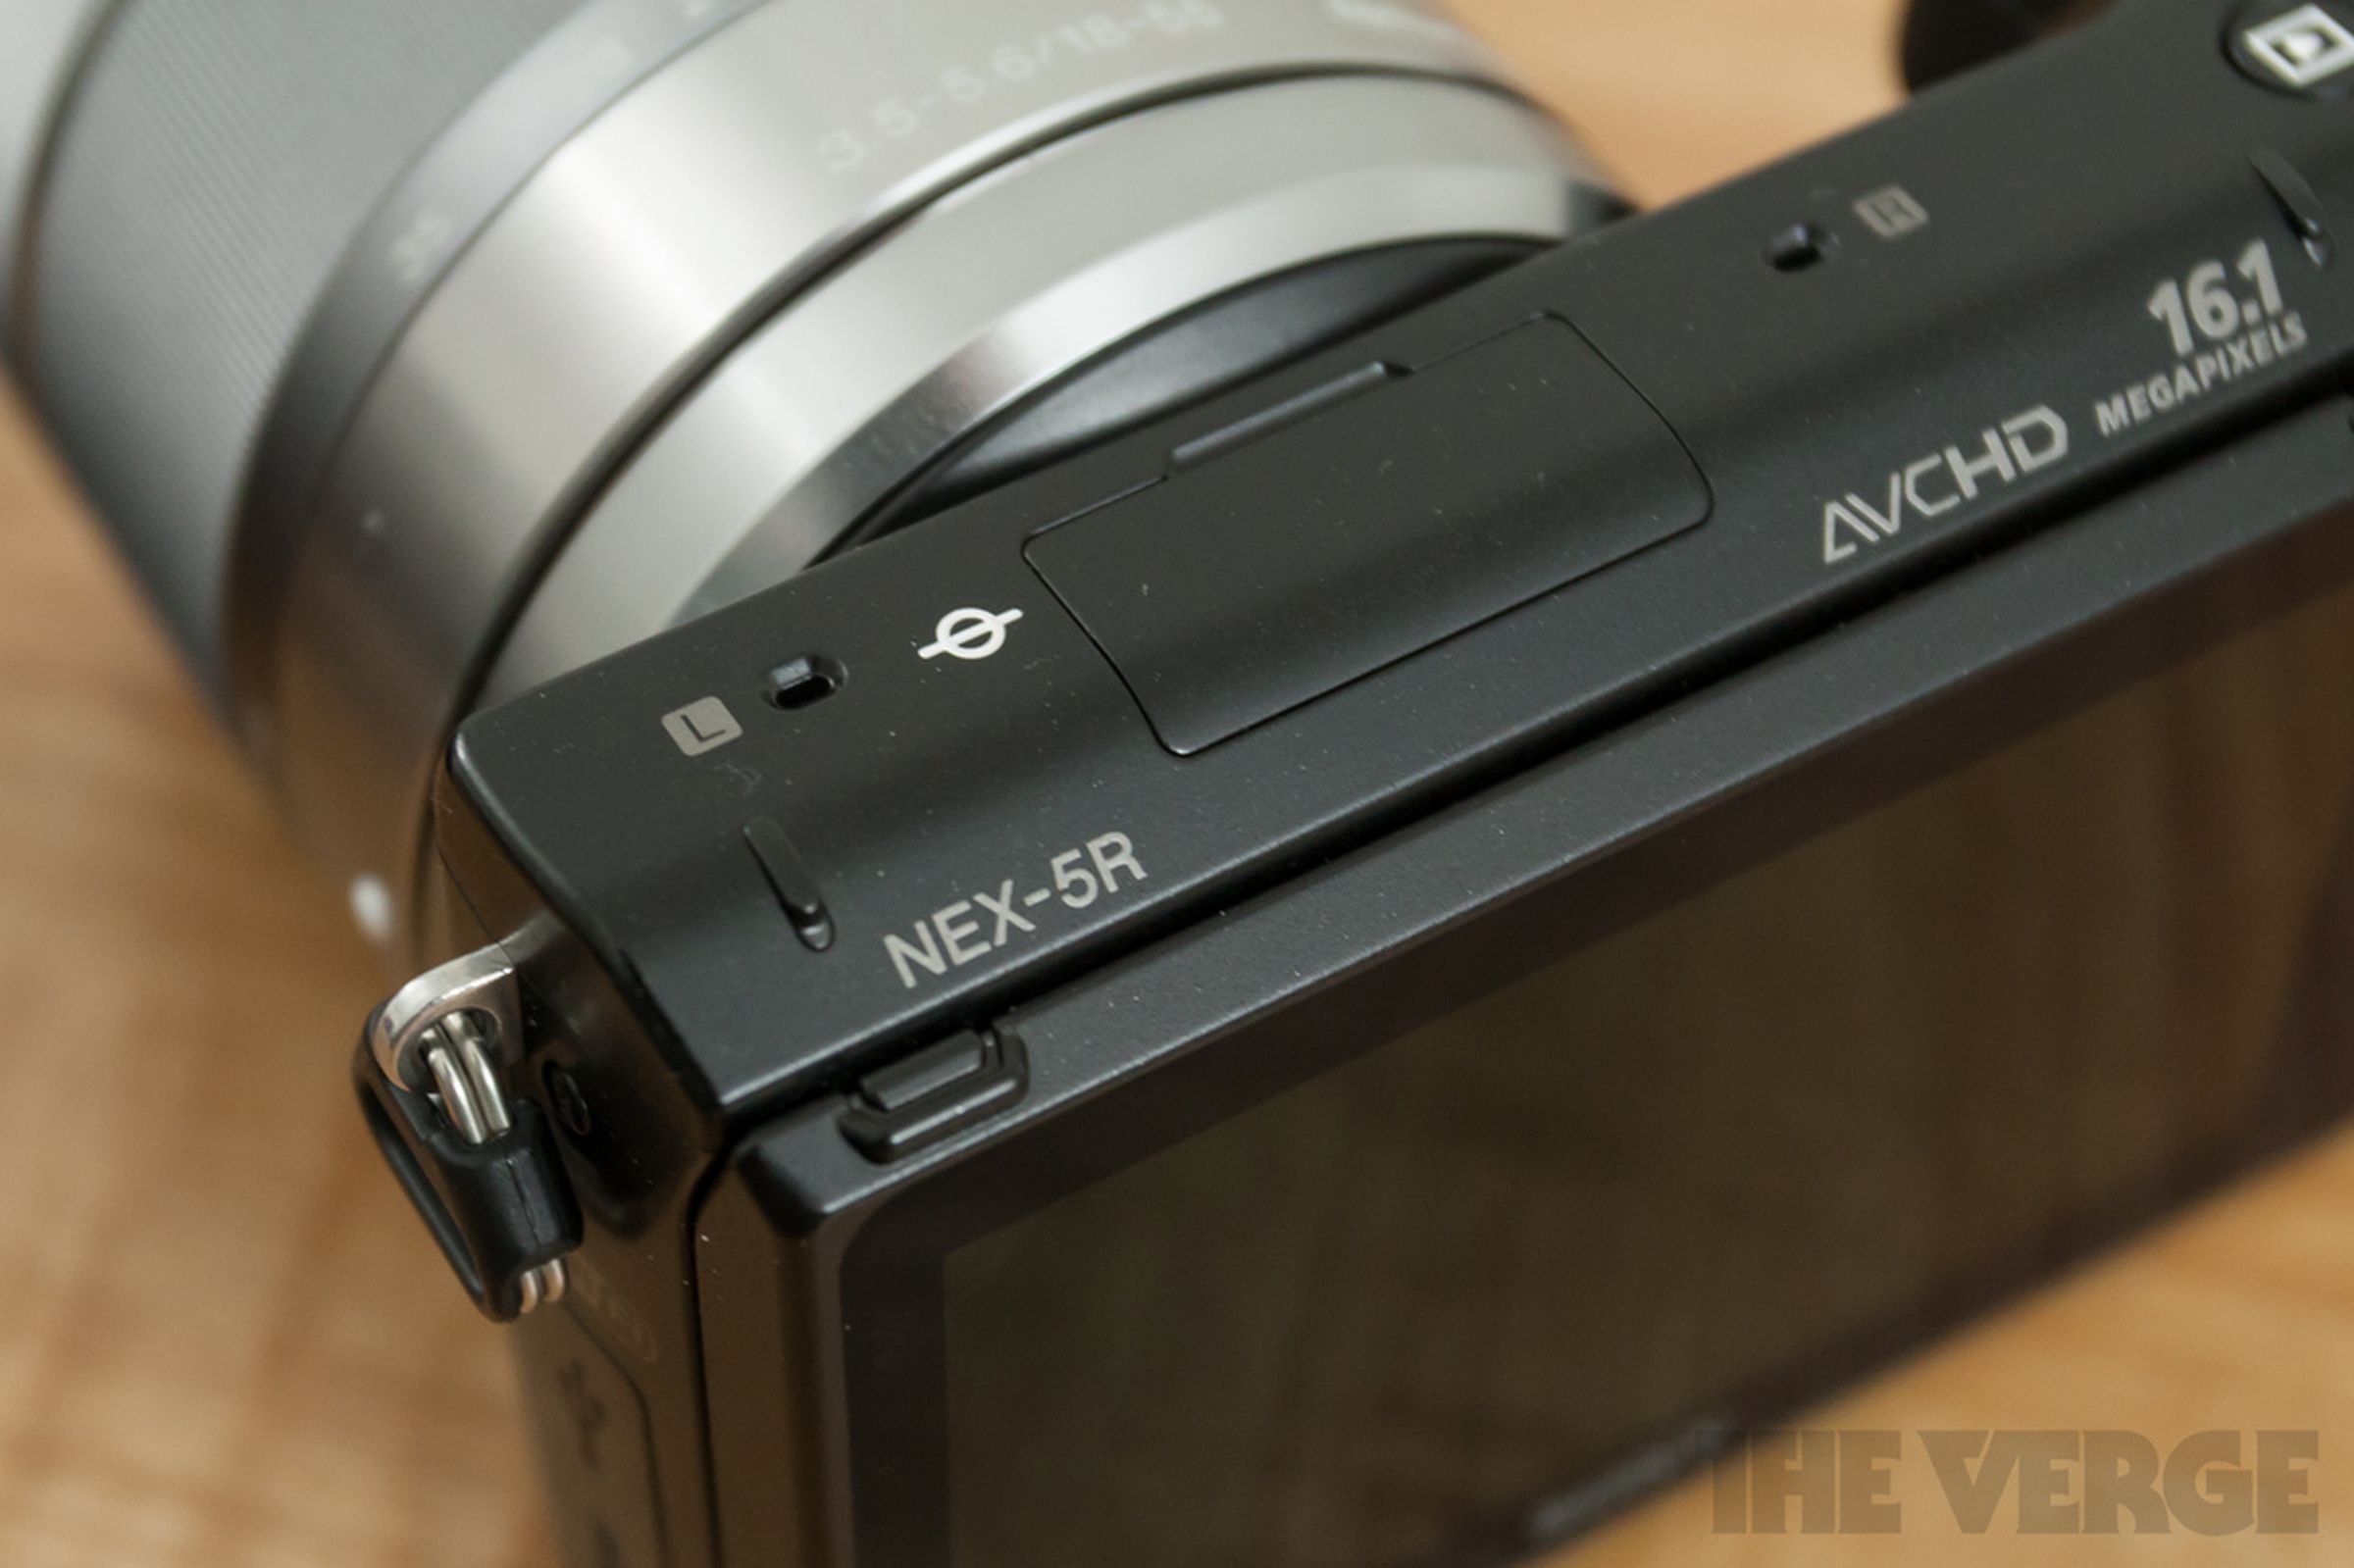 Sony NEX-5R review photos